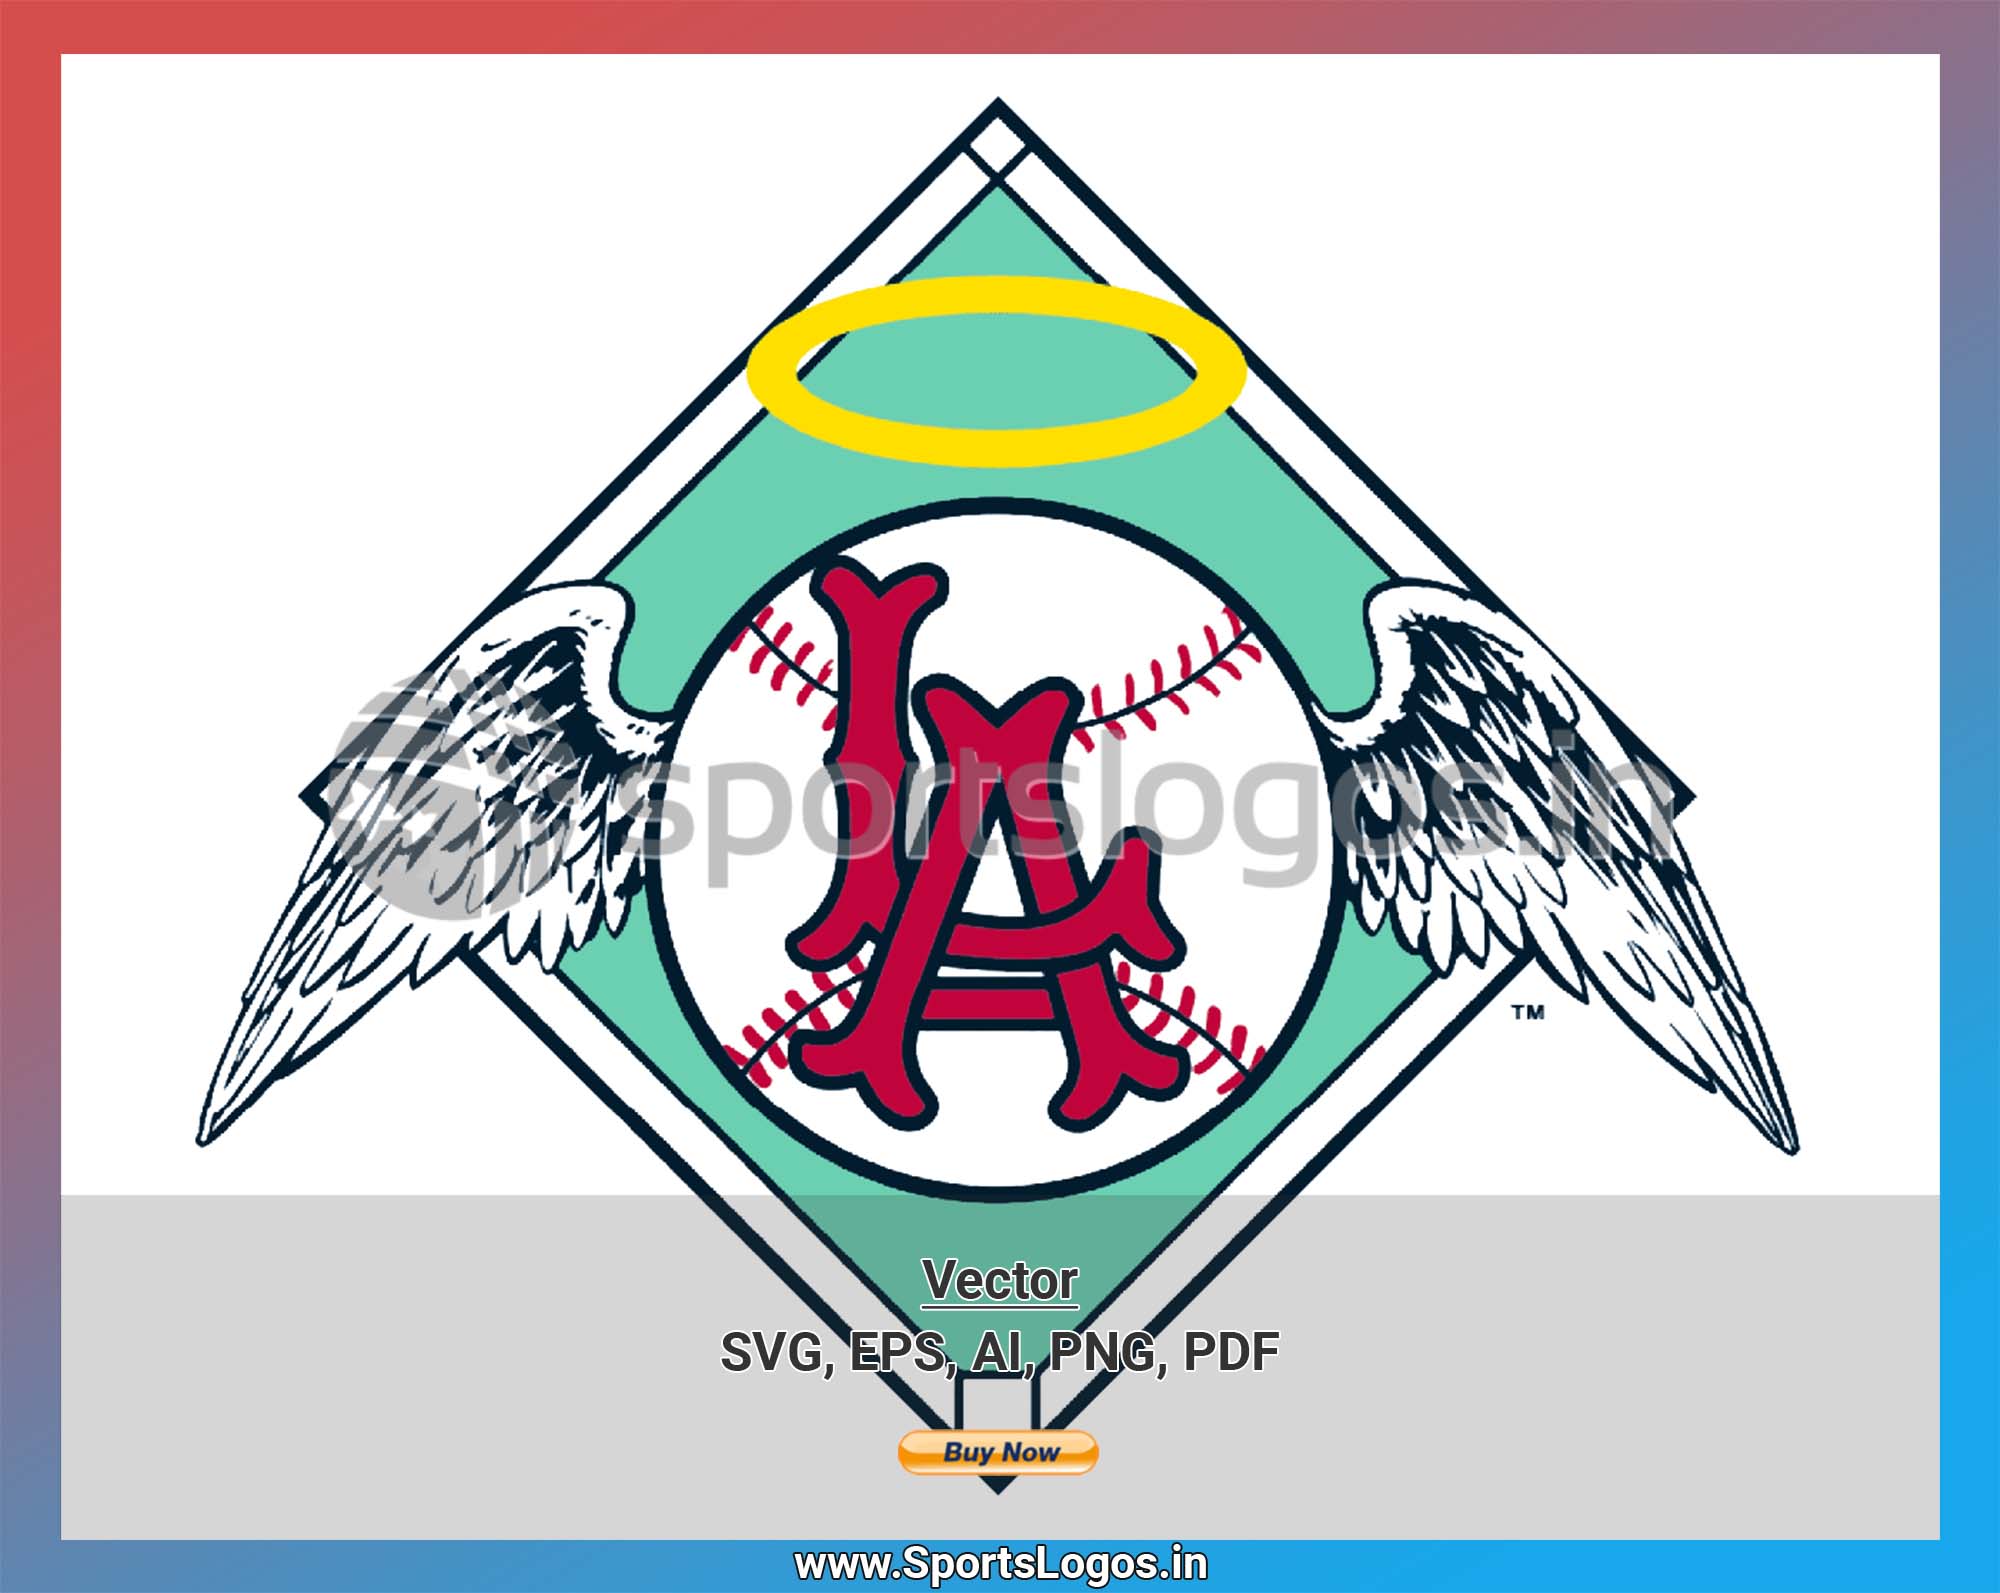 Los Angeles Angels - Baseball Sports Vector SVG Logo in 5 formats